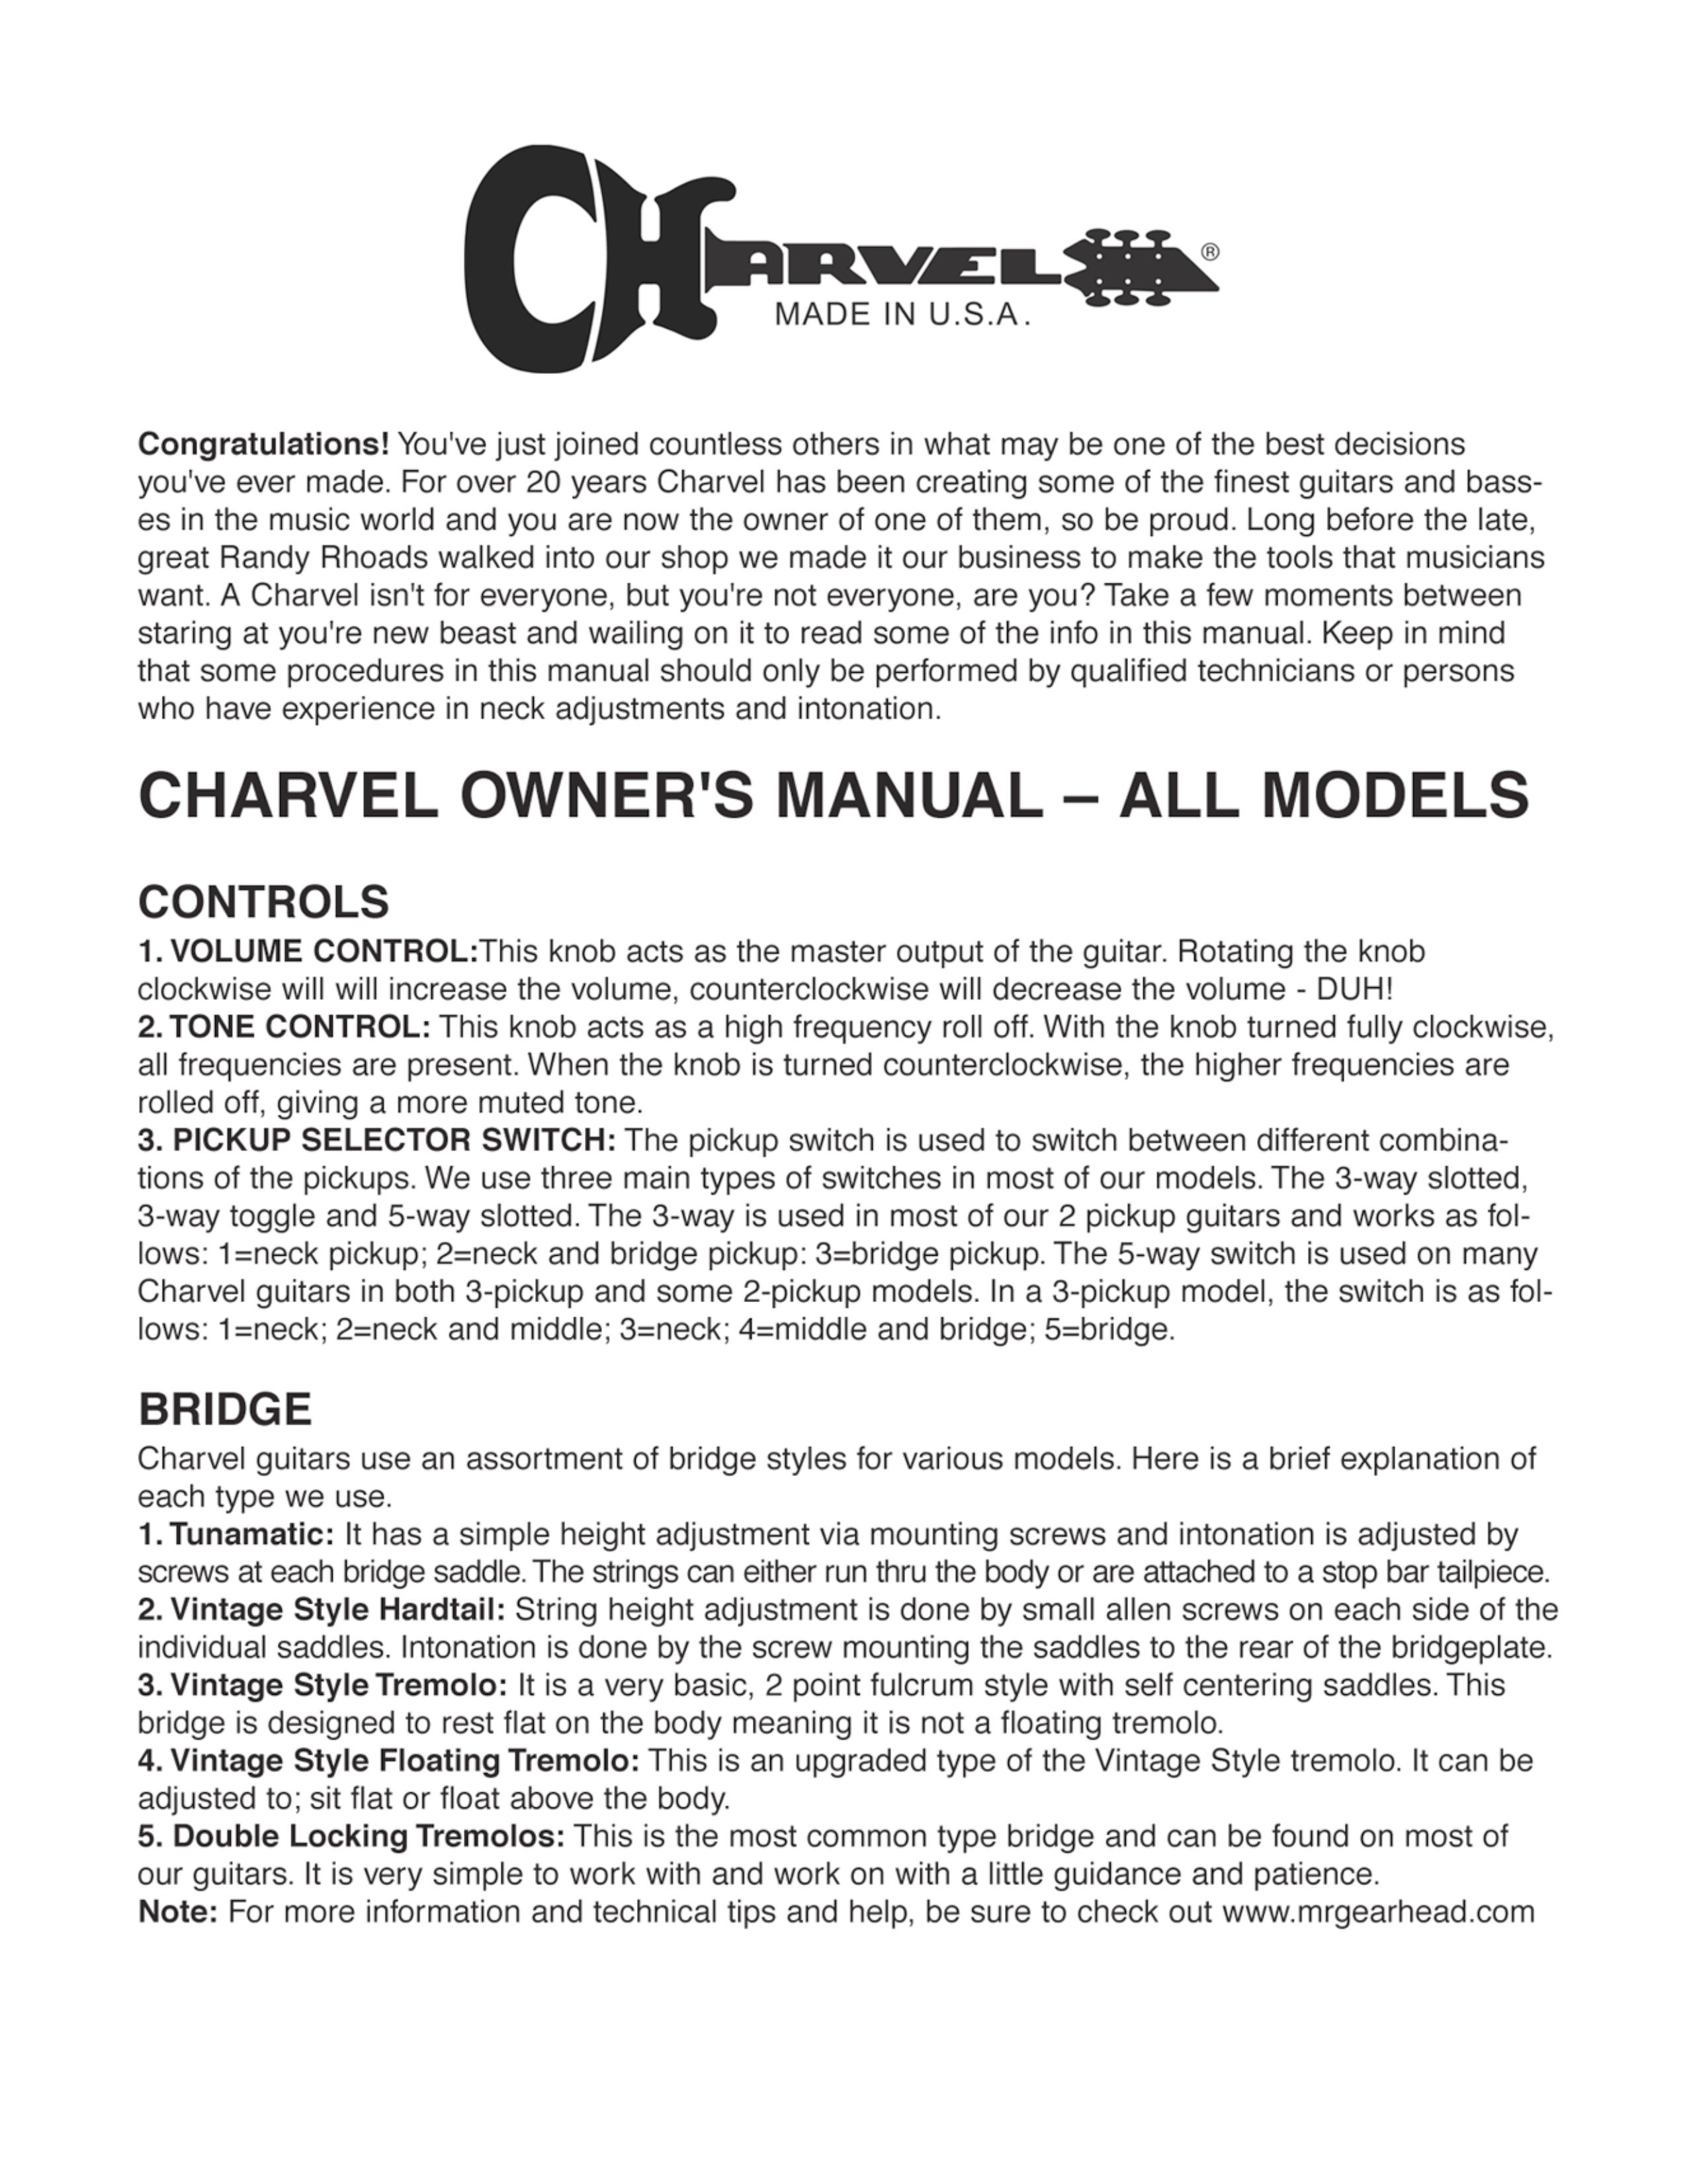 Charvel Star Guitar Guitar User Manual (Page 1)